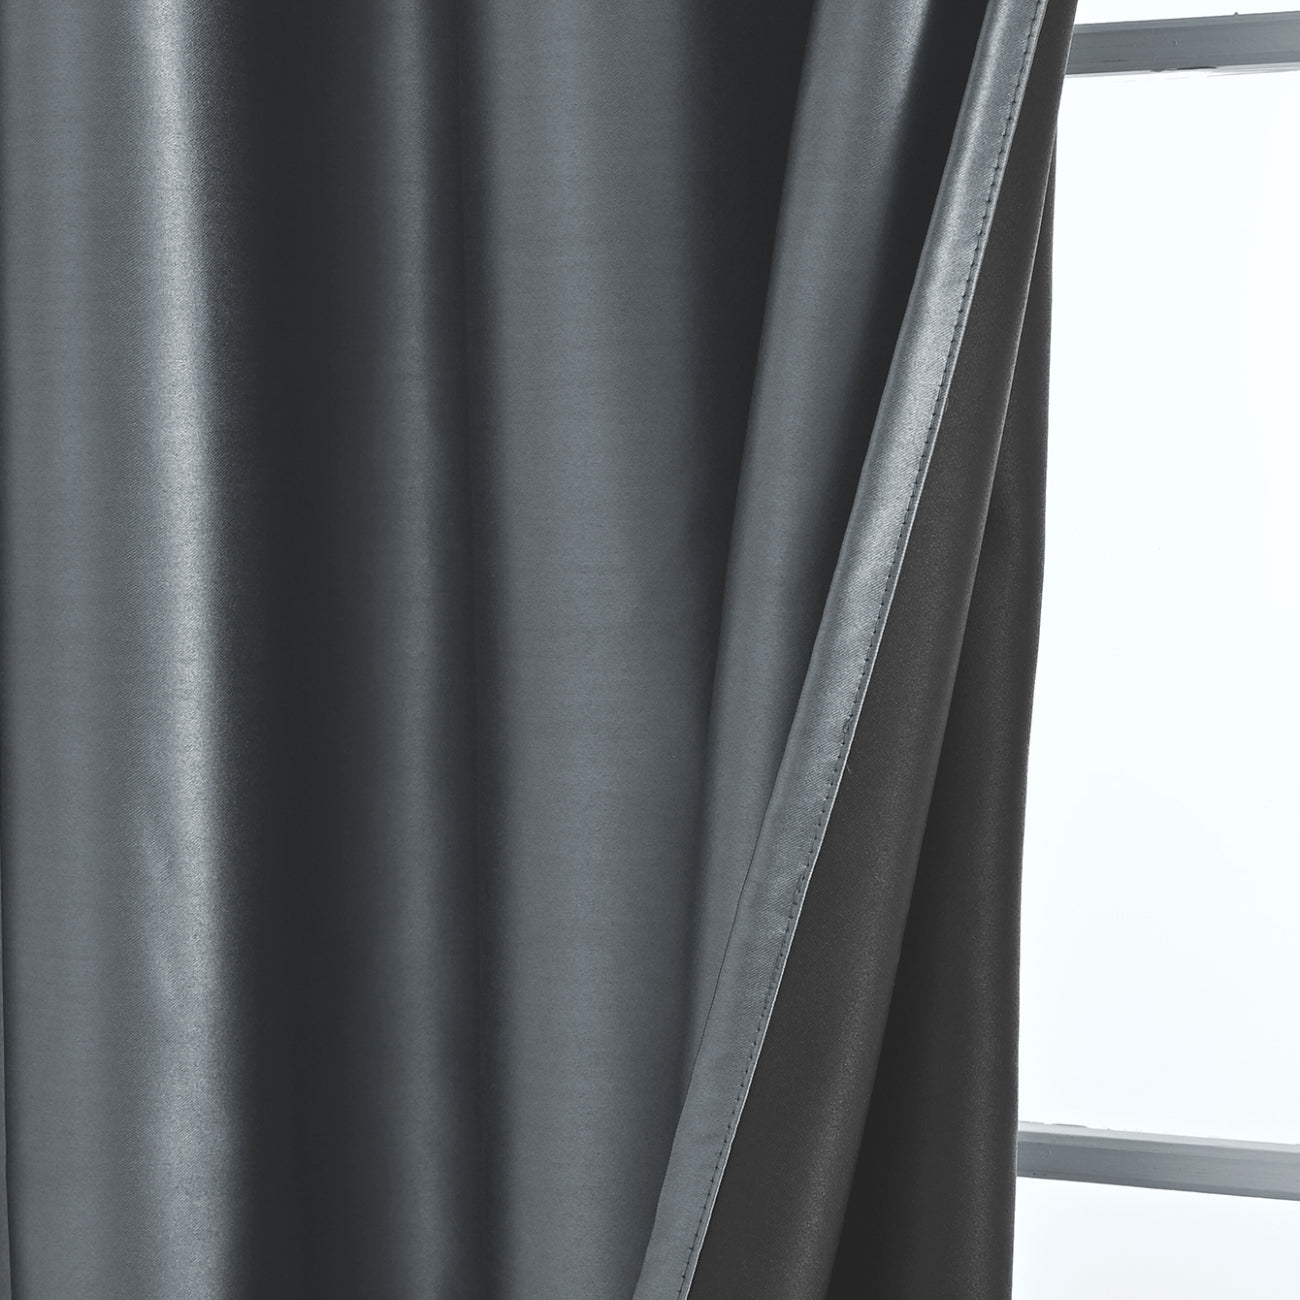 Modern Velvet Solid Color Blackout Thermal Curtains, Dark Gray/Beige